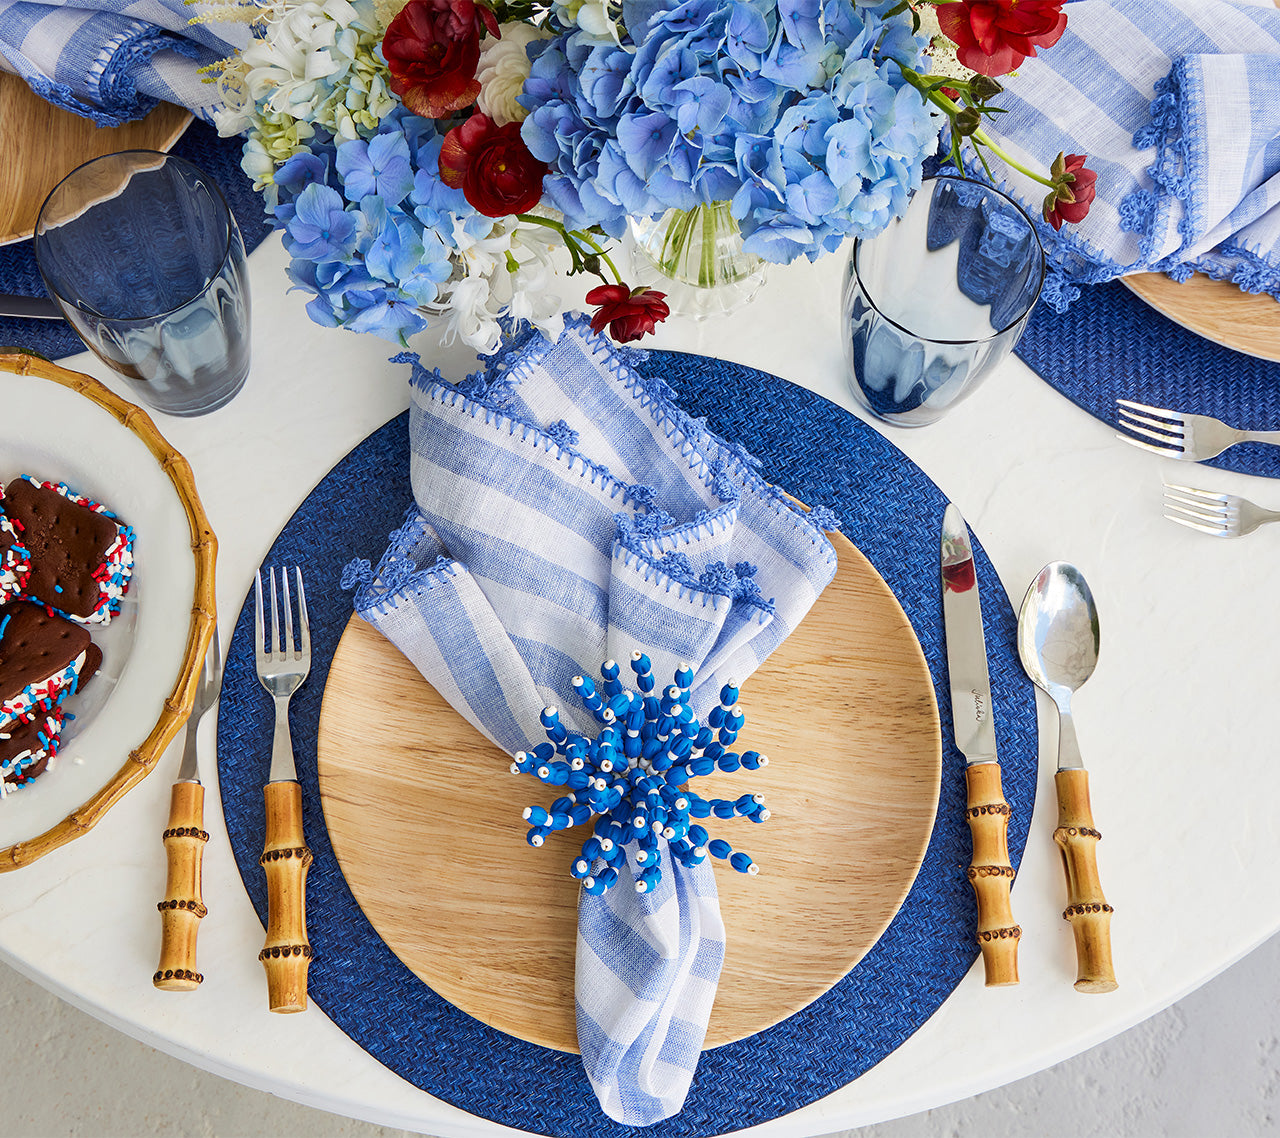 Place setting featuring a Kim Seybert Luxury Linea Napkin in white & blue with blue hydrangea